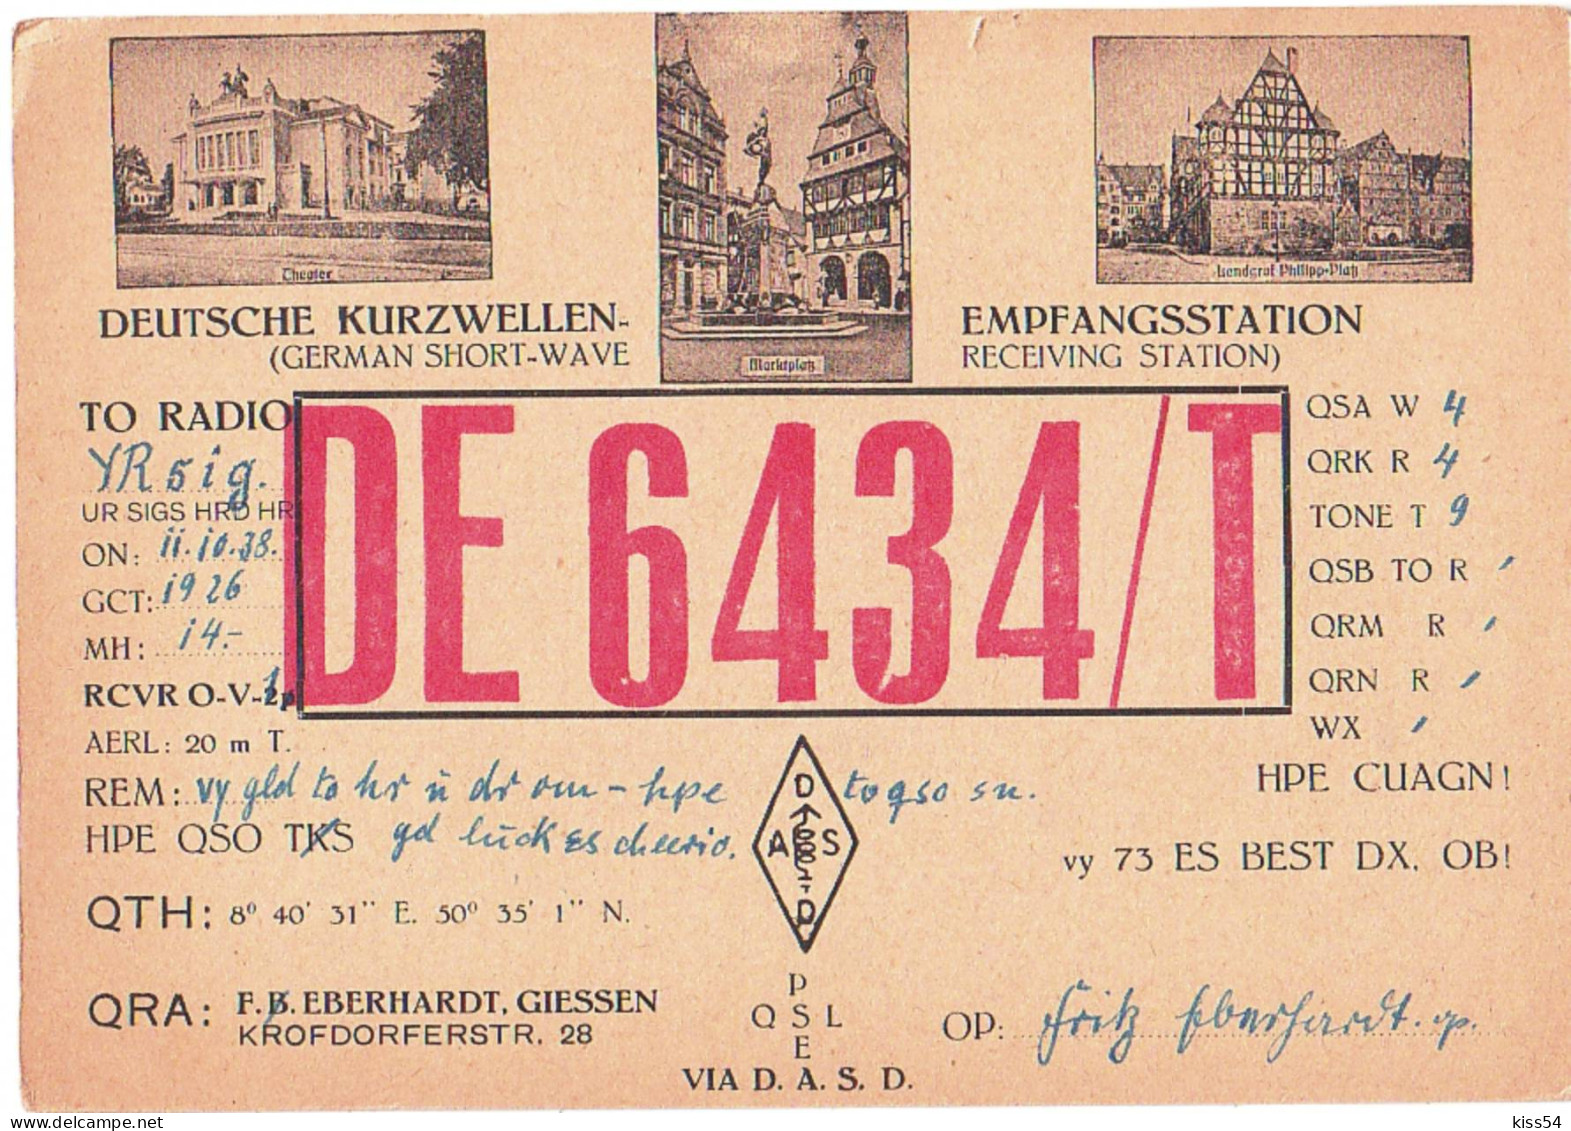 Q 40 - 31 GERMANY - 1938 - Radio Amateur